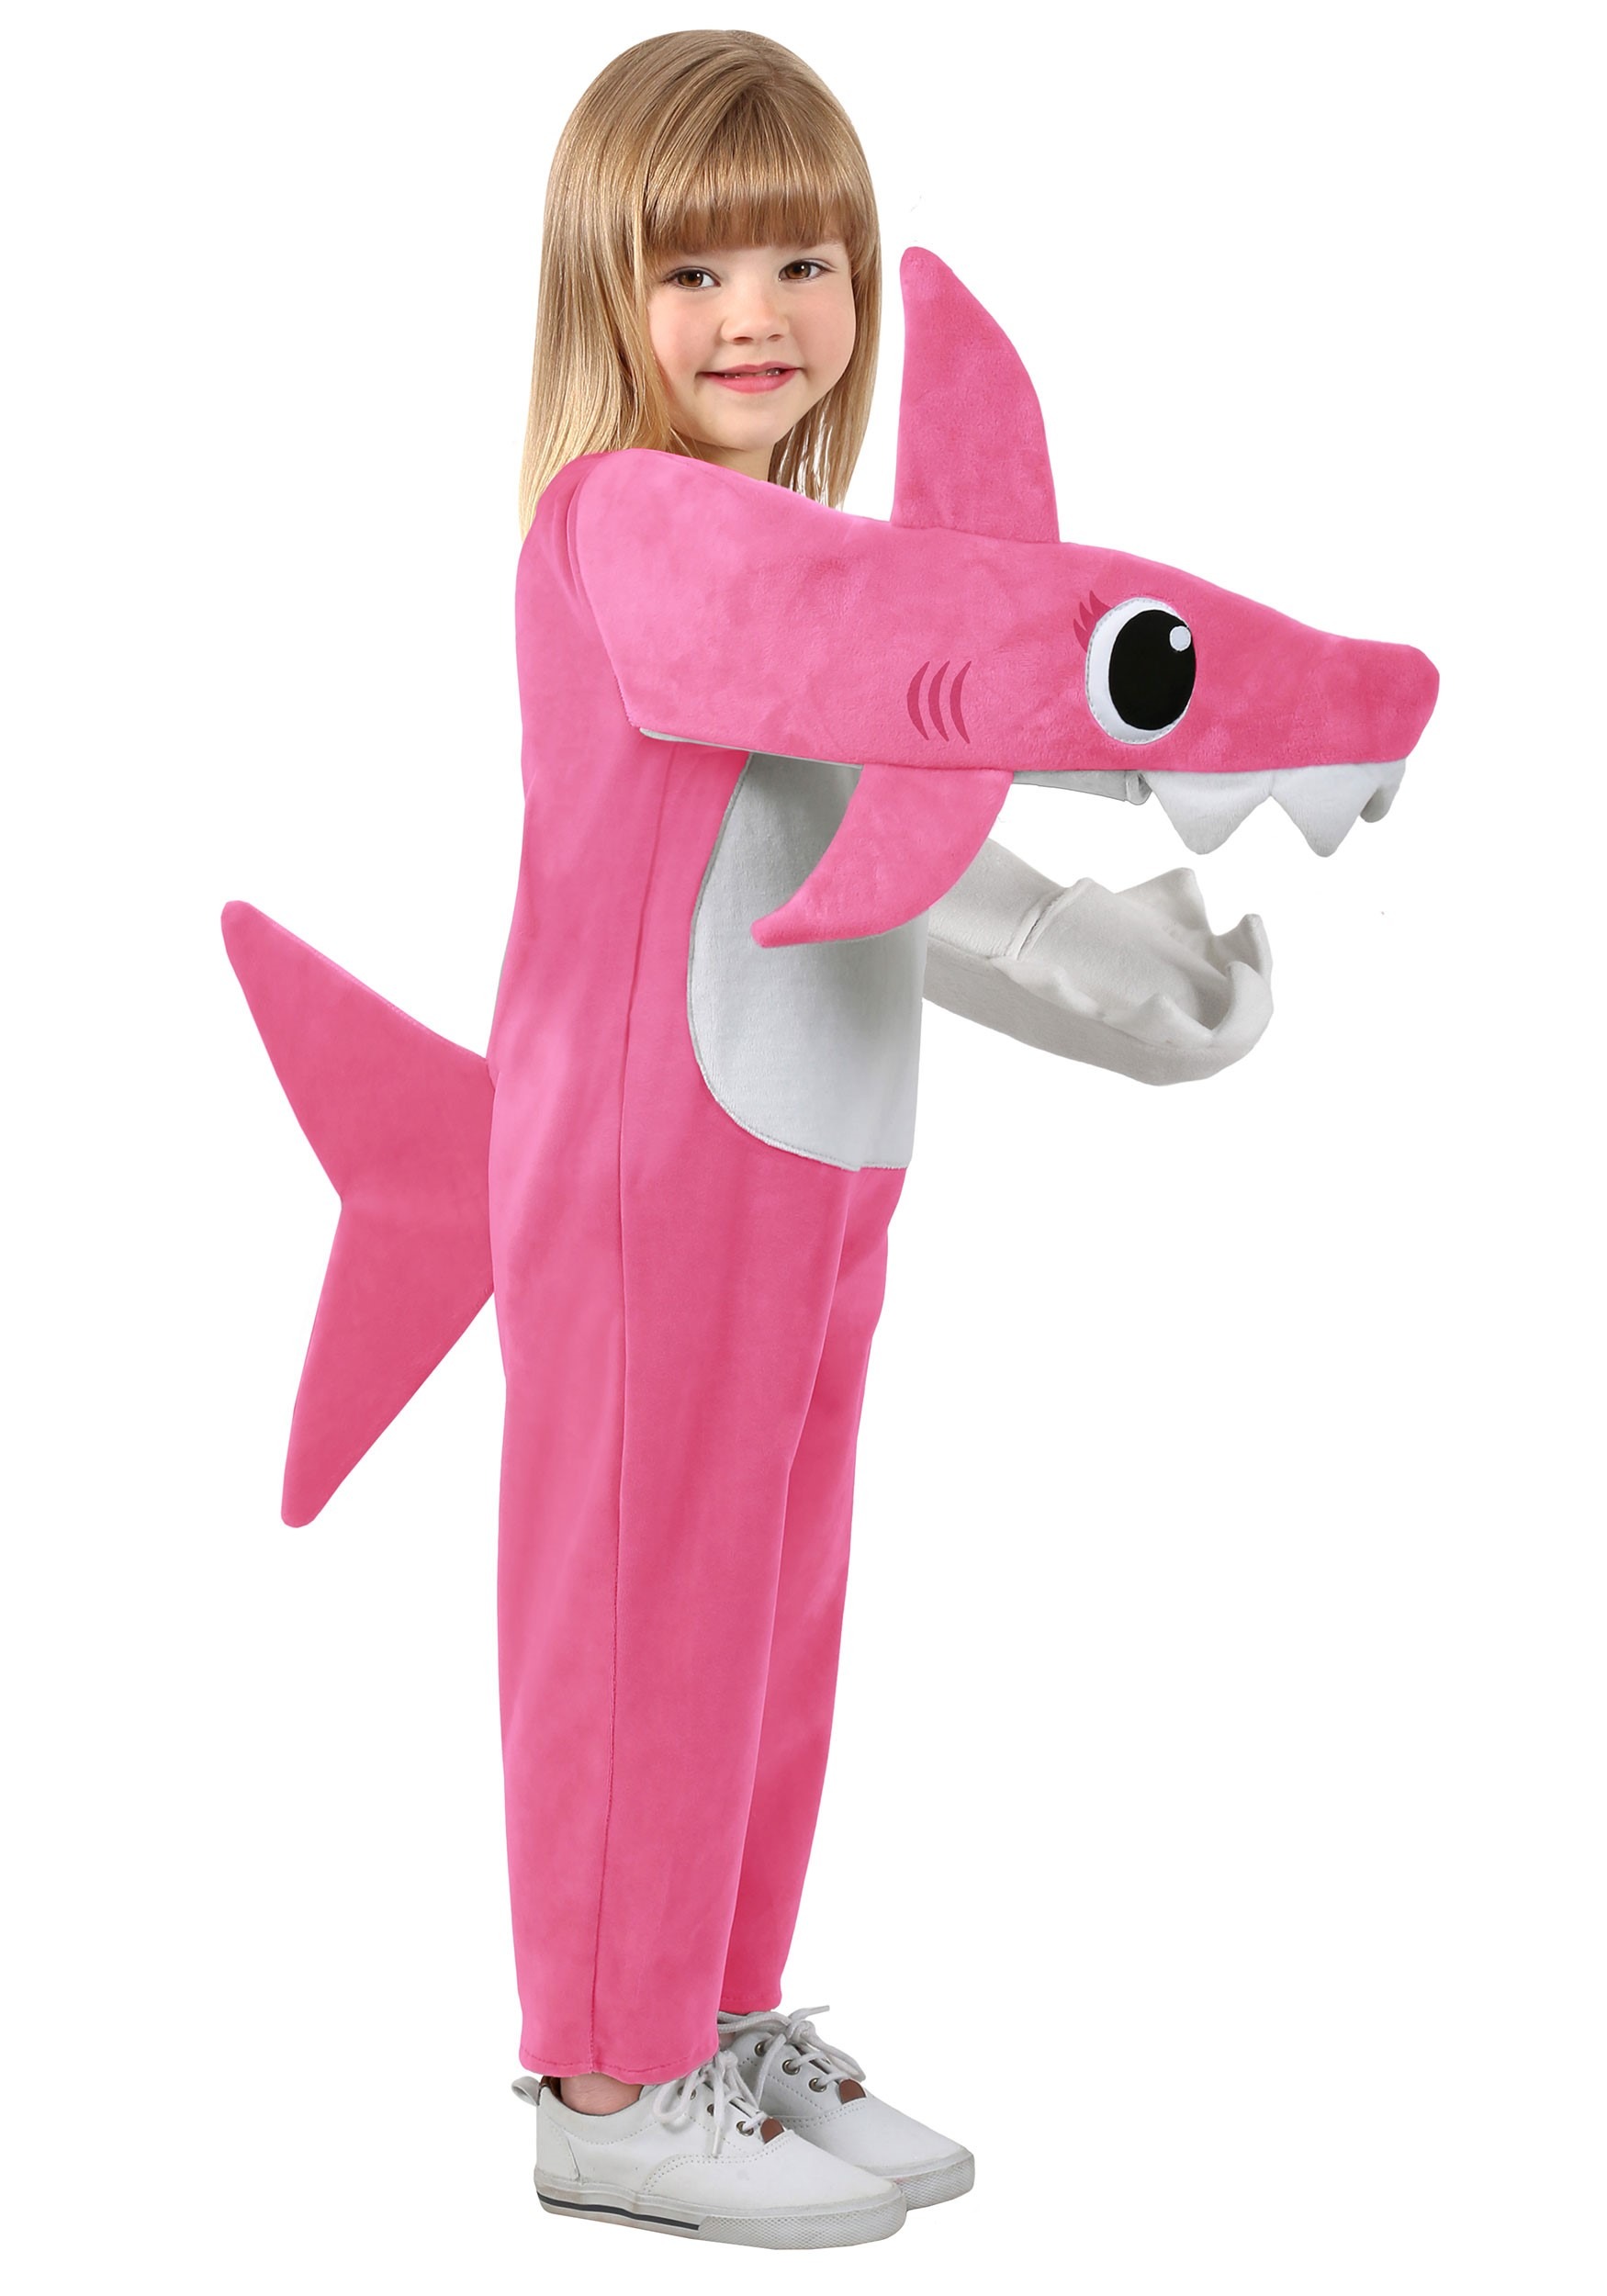 baby shark costume for baby